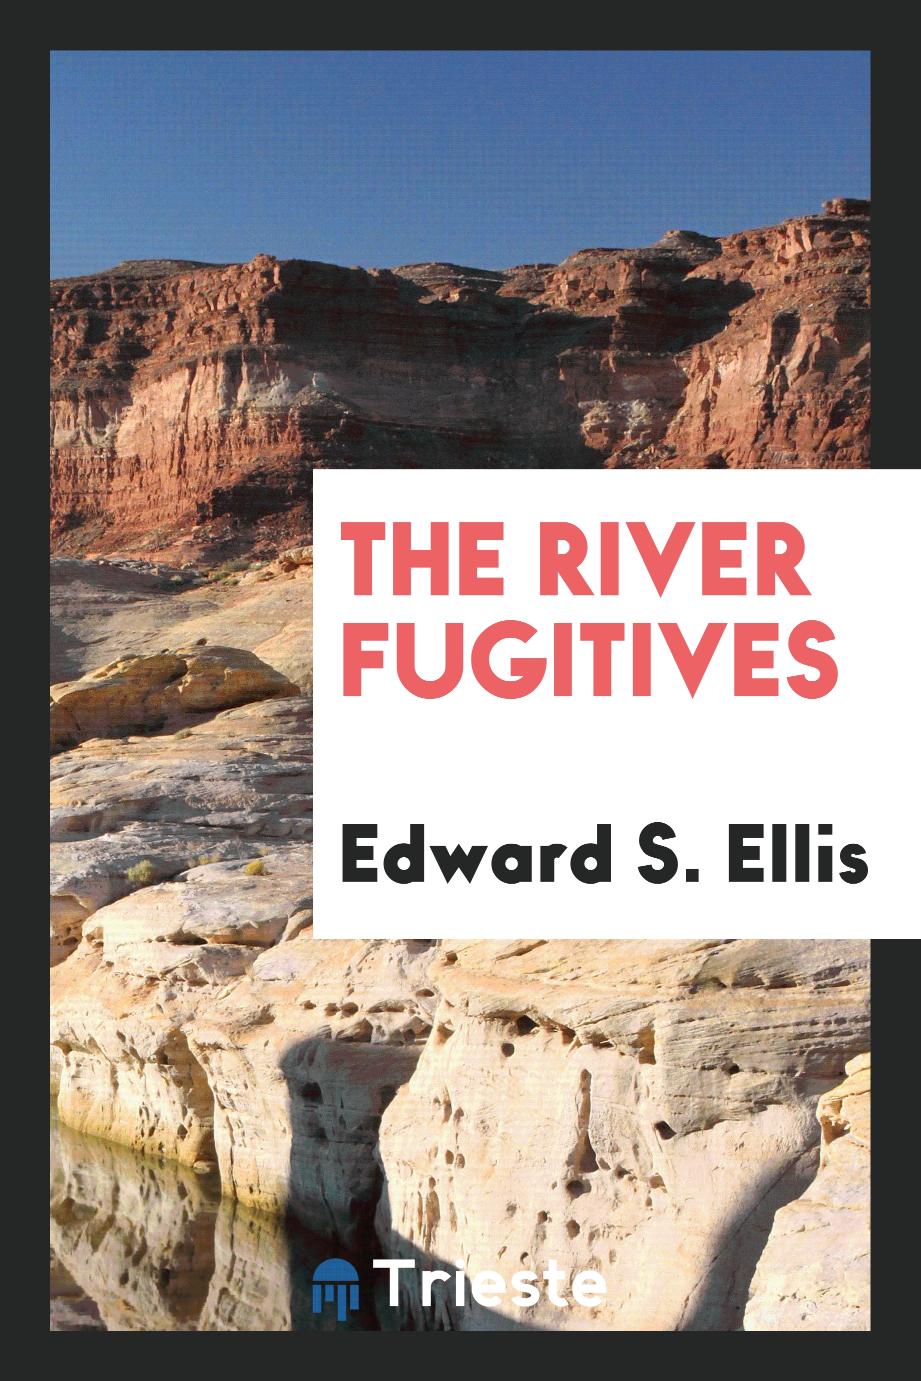 The river fugitives